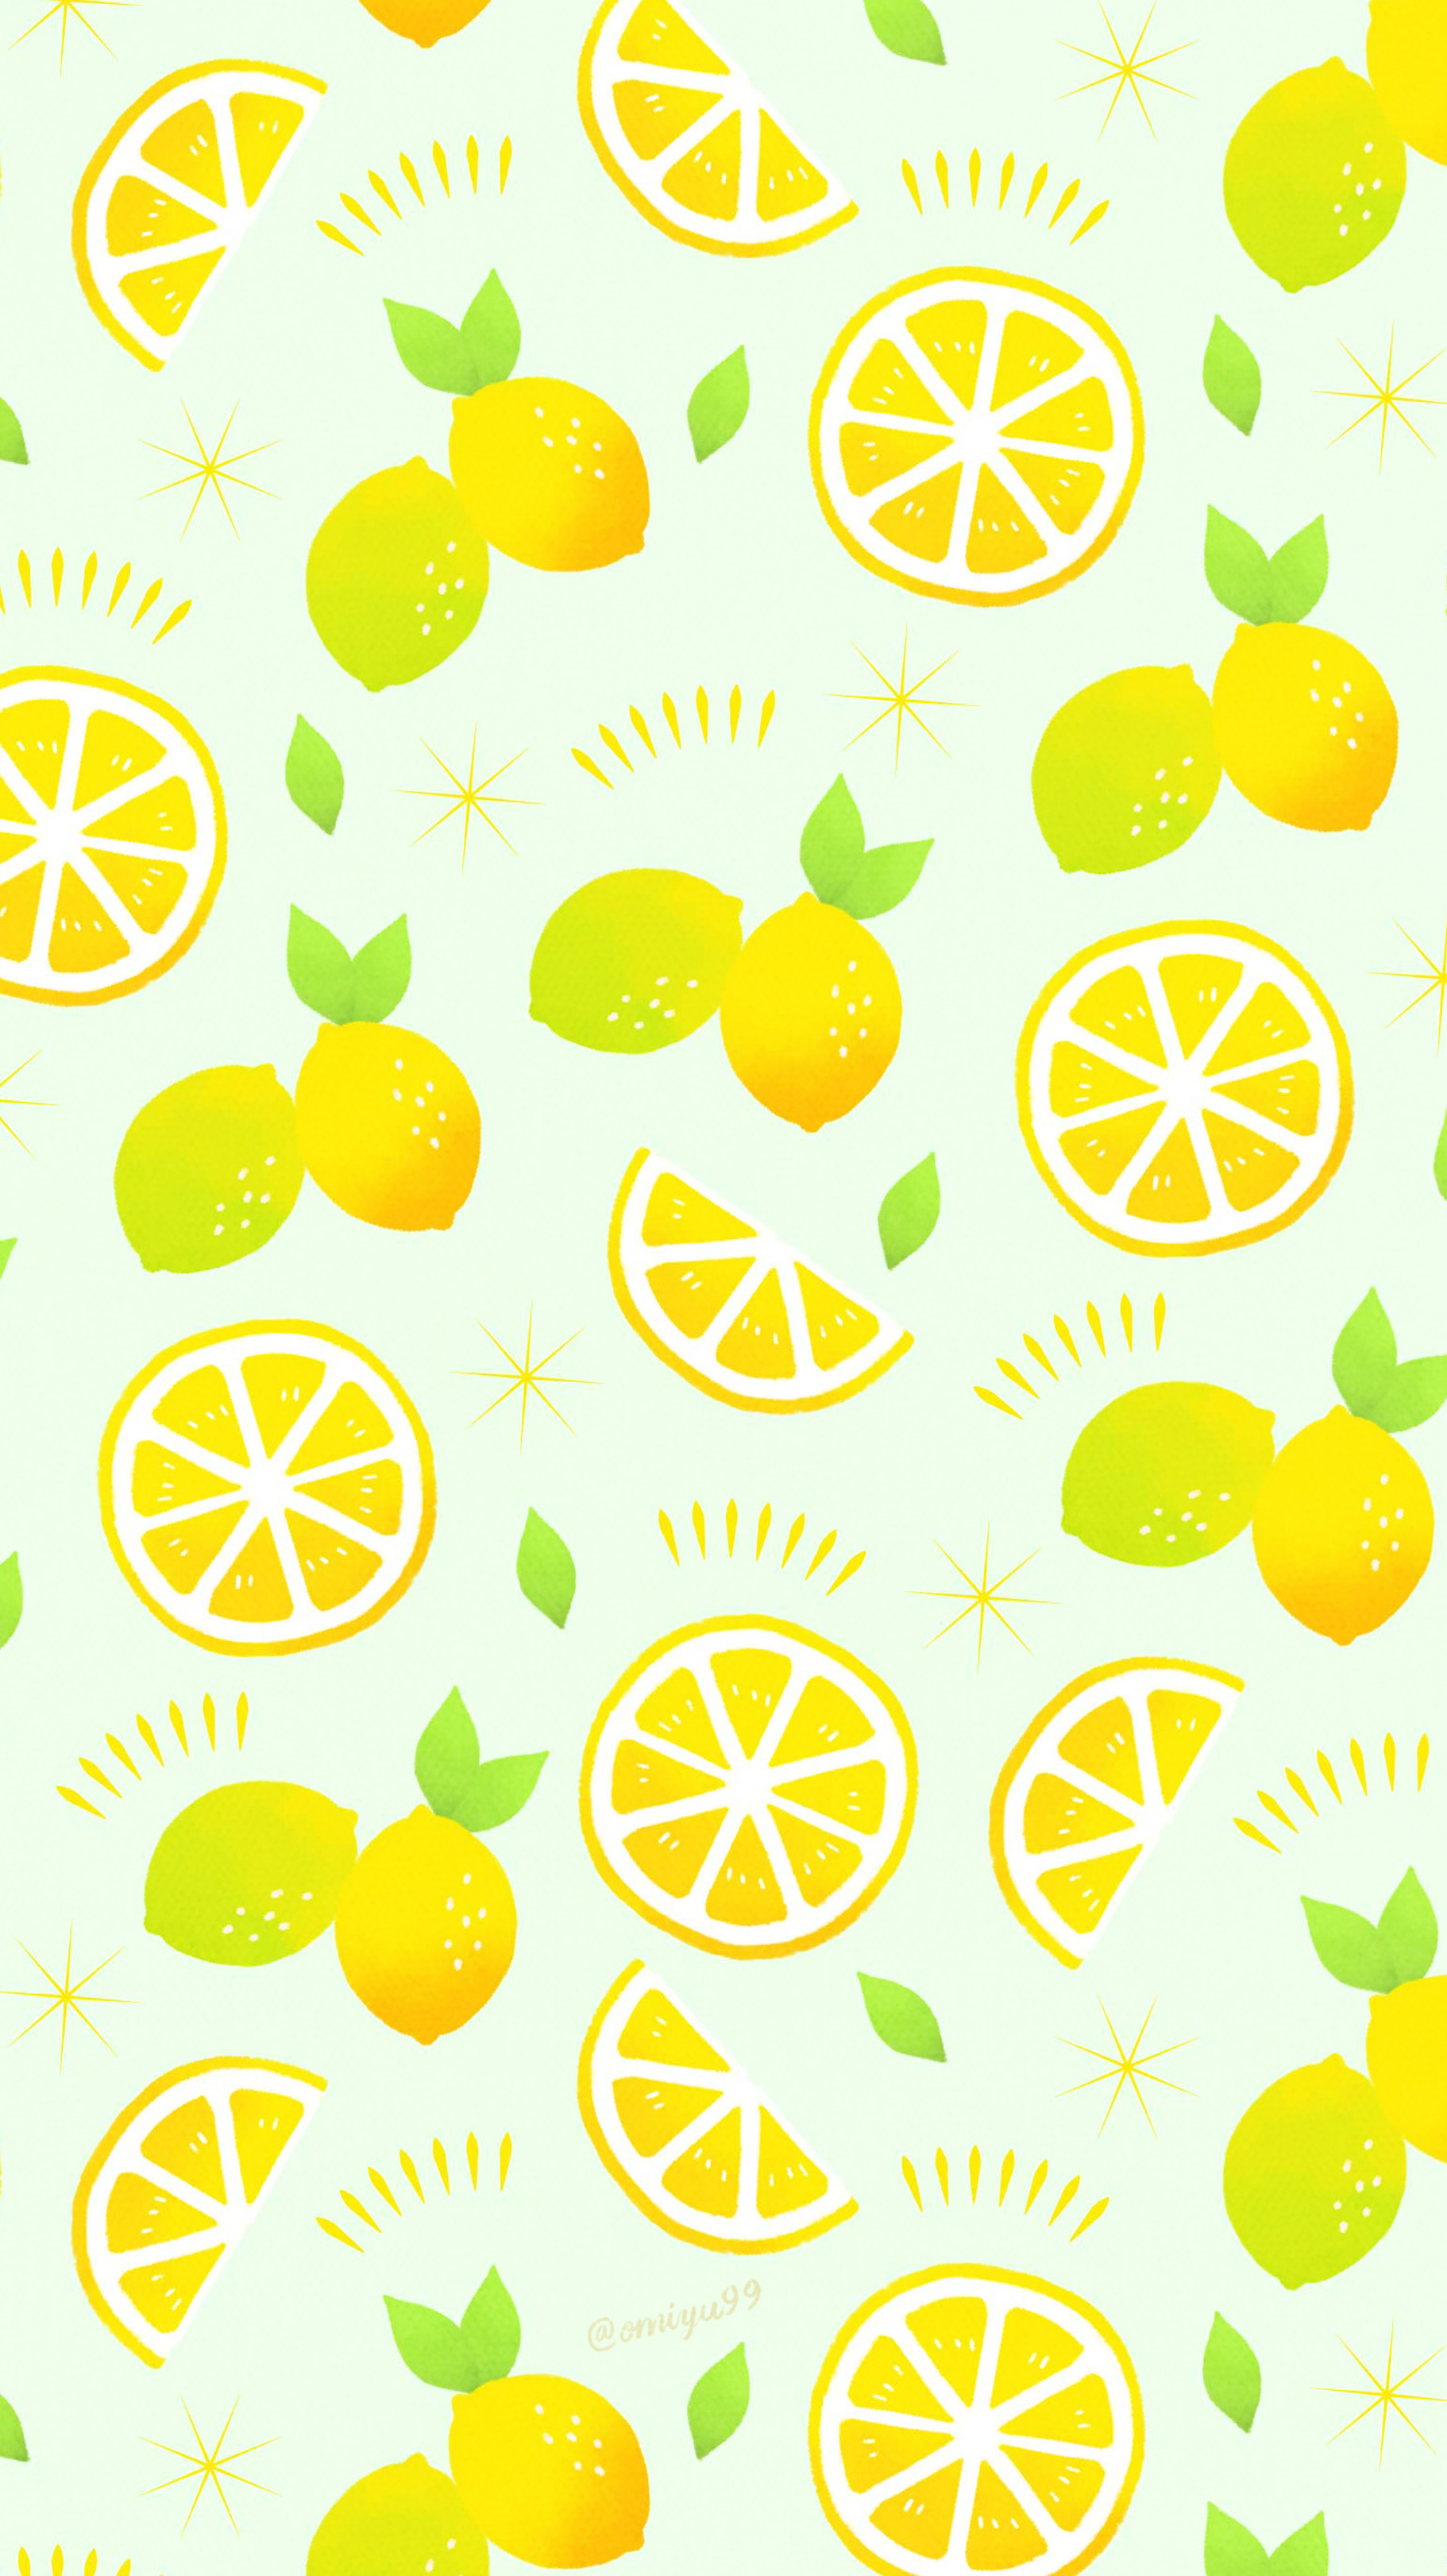 Omiyu お返事遅くなります レモンな壁紙 Illust Illustration 壁紙 イラスト Iphone壁紙 レモン Lemon 食べ物 T Co Aqgkzgjwwx Twitter